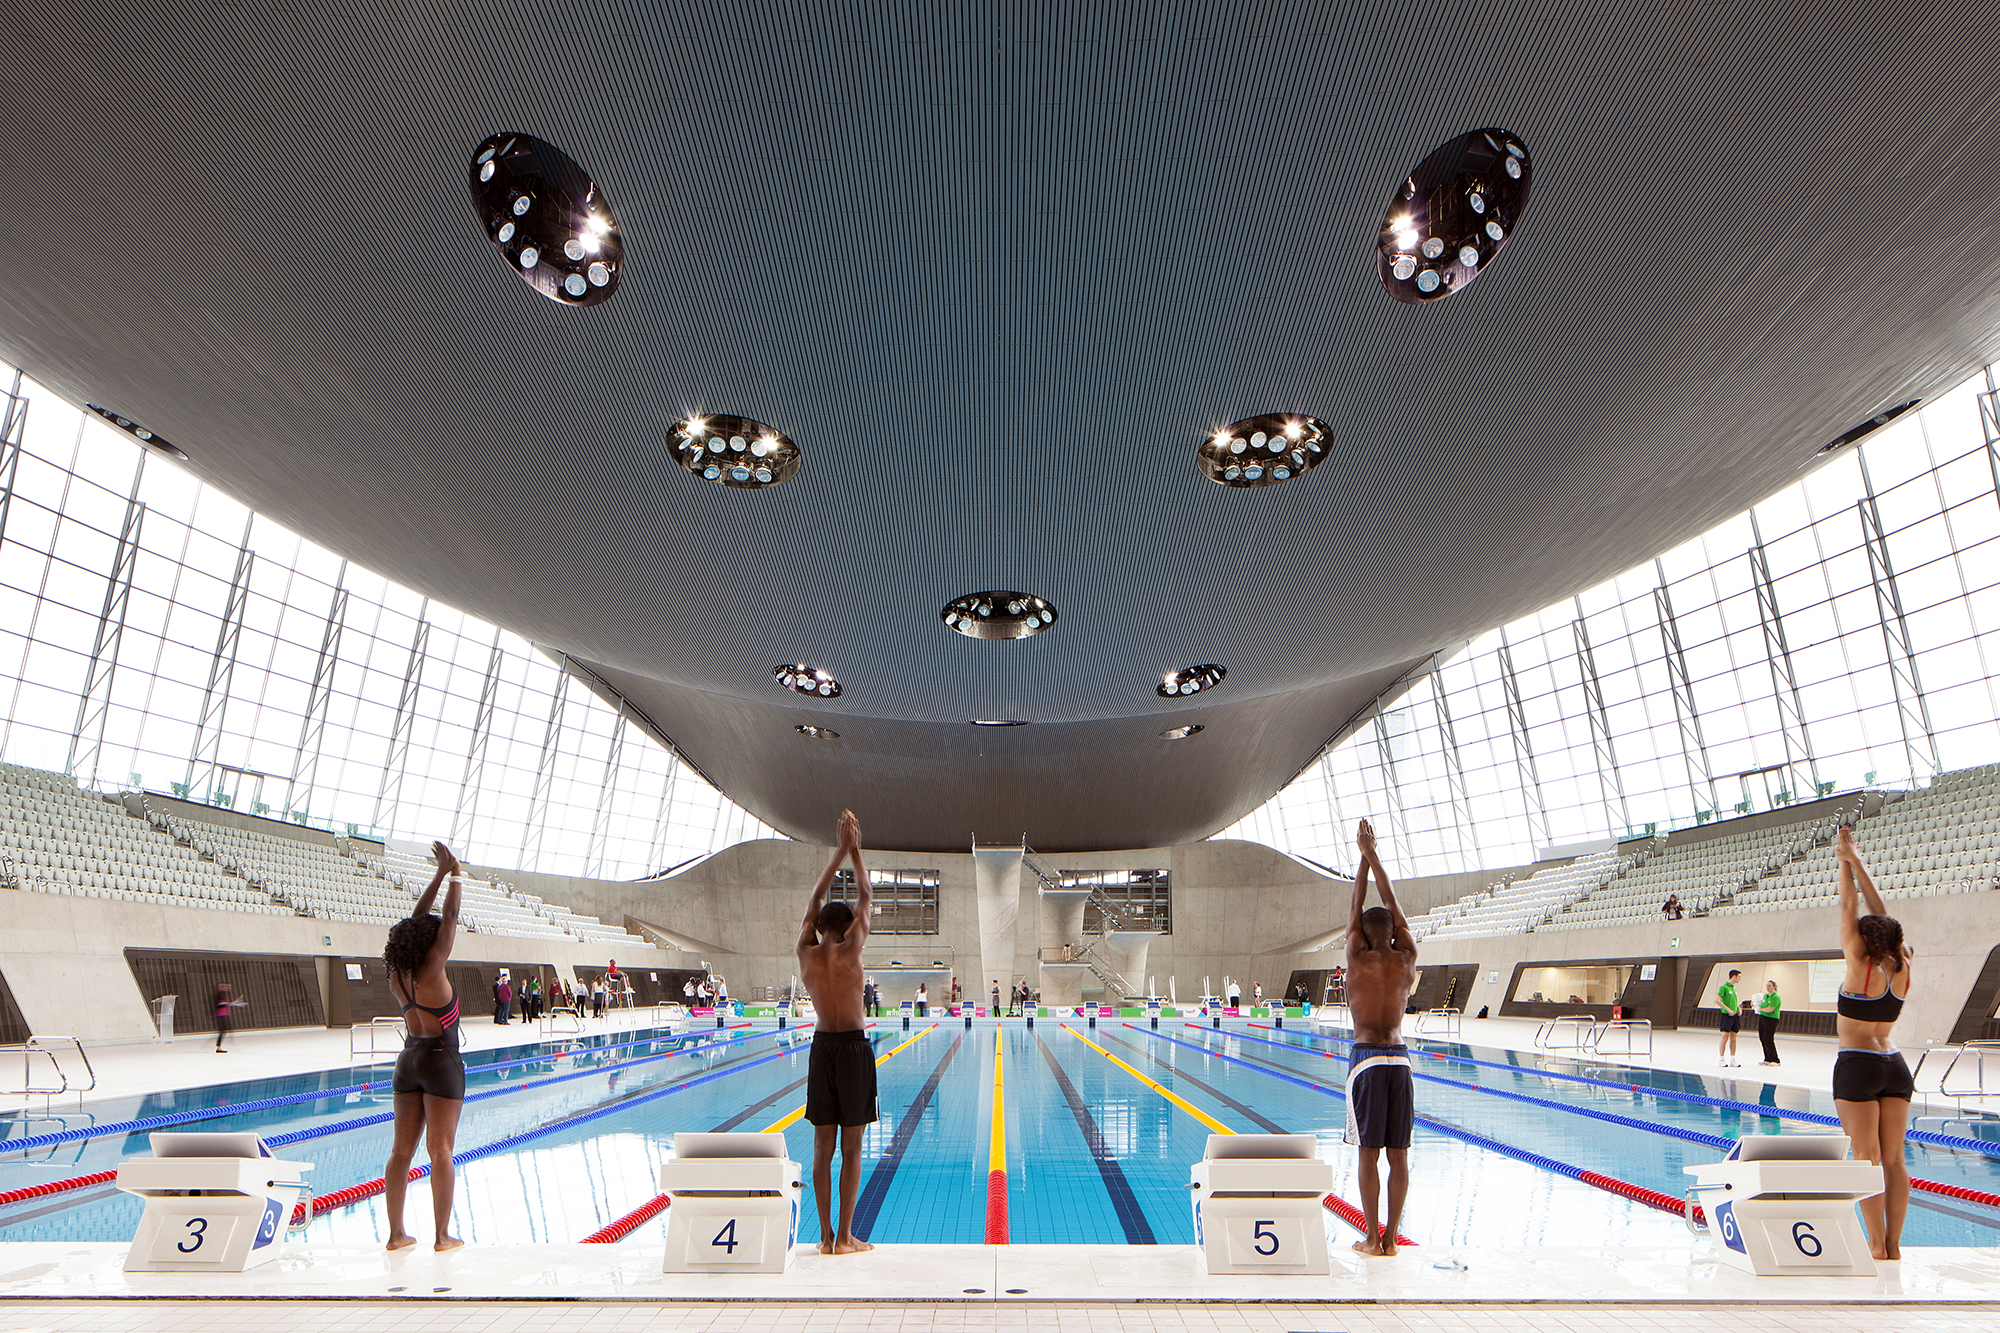 London Aquatics Centre in London.